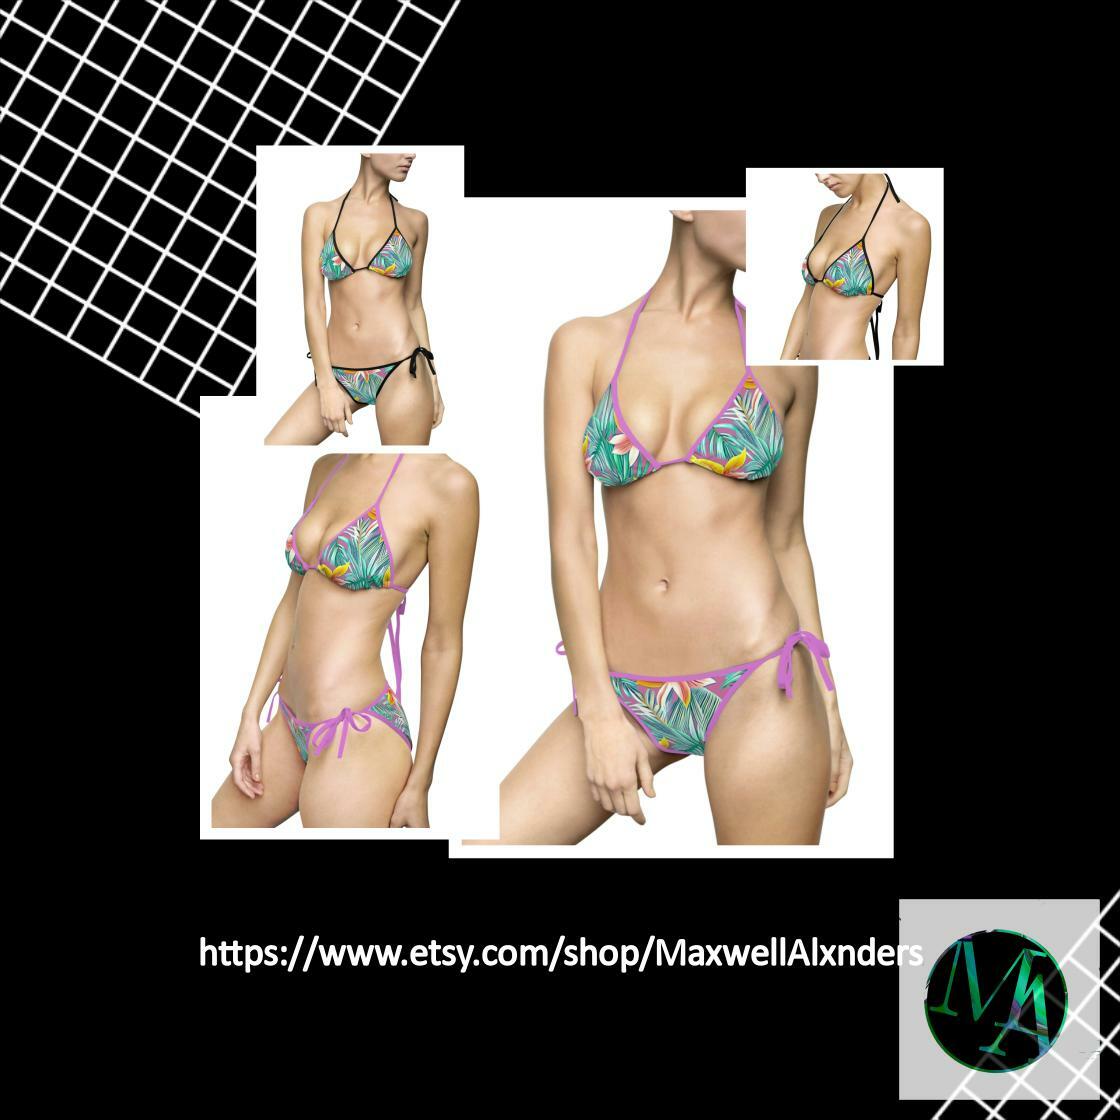 In stock. Going soon. Women's Tropical Pattern Bikini Swimsuit only at $42.16.. 
etsy.com/listing/142231…
#Tankini #Monokini